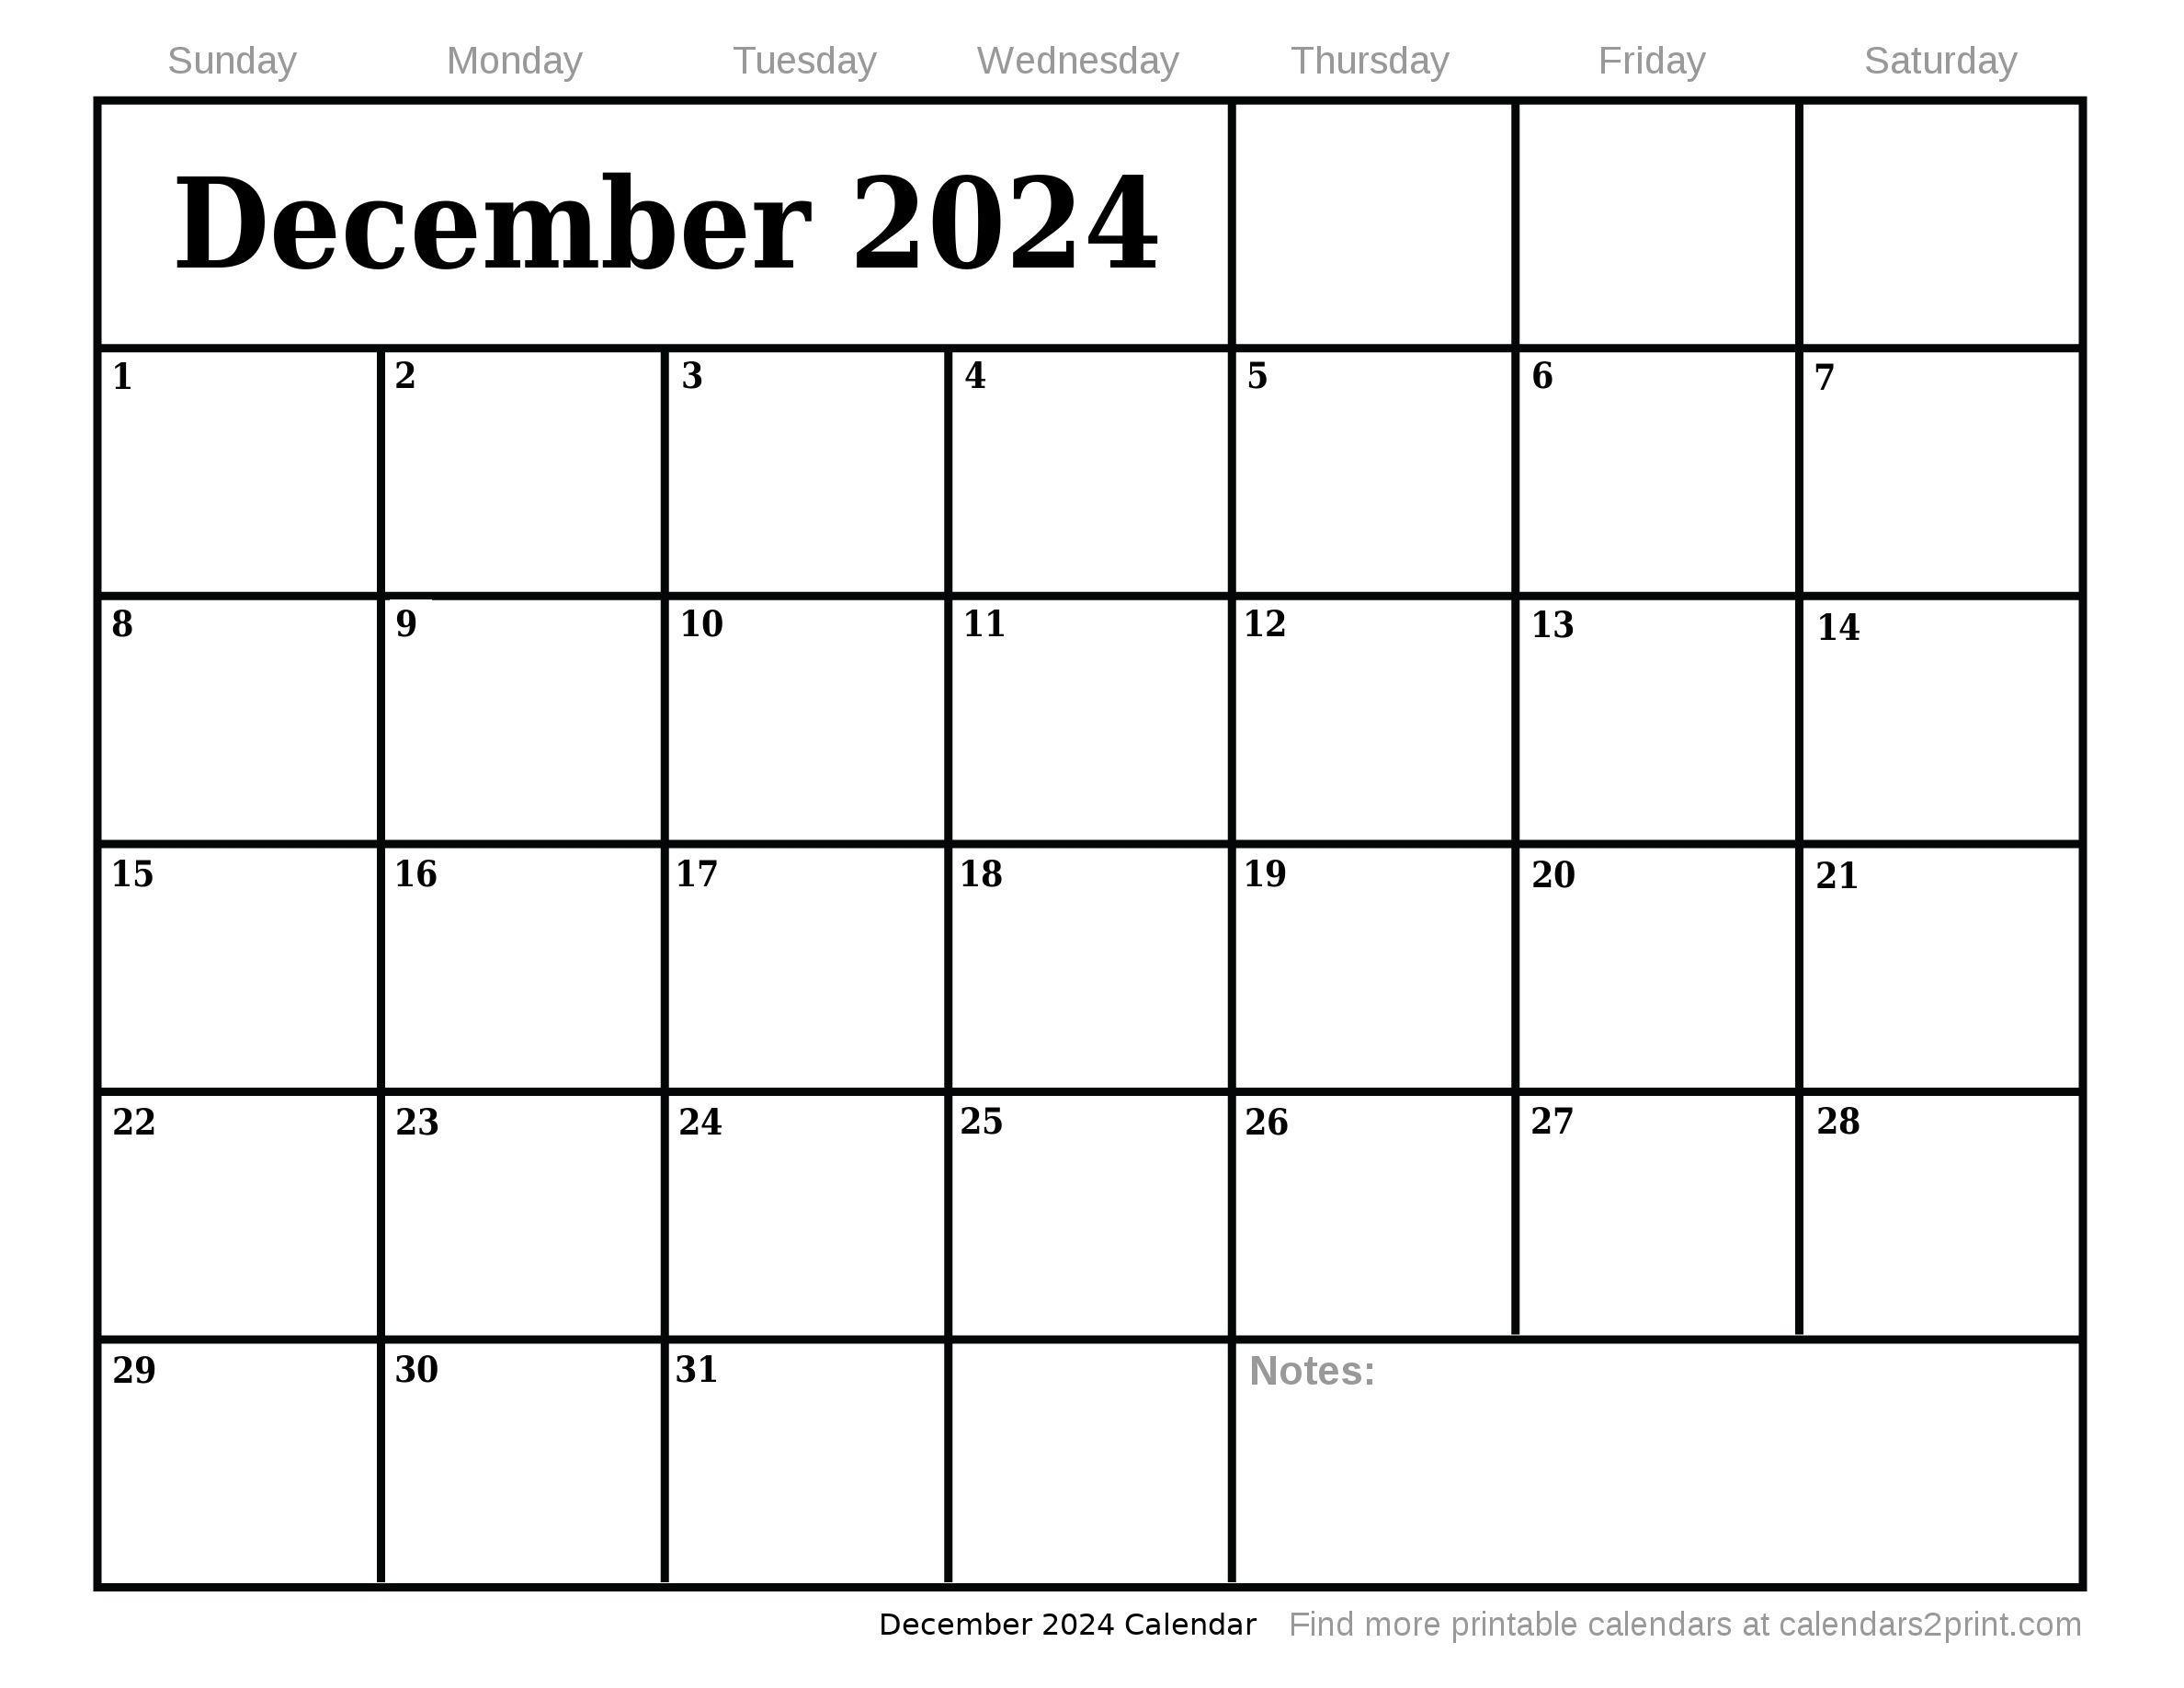 Dec 2024 Printable Calendar